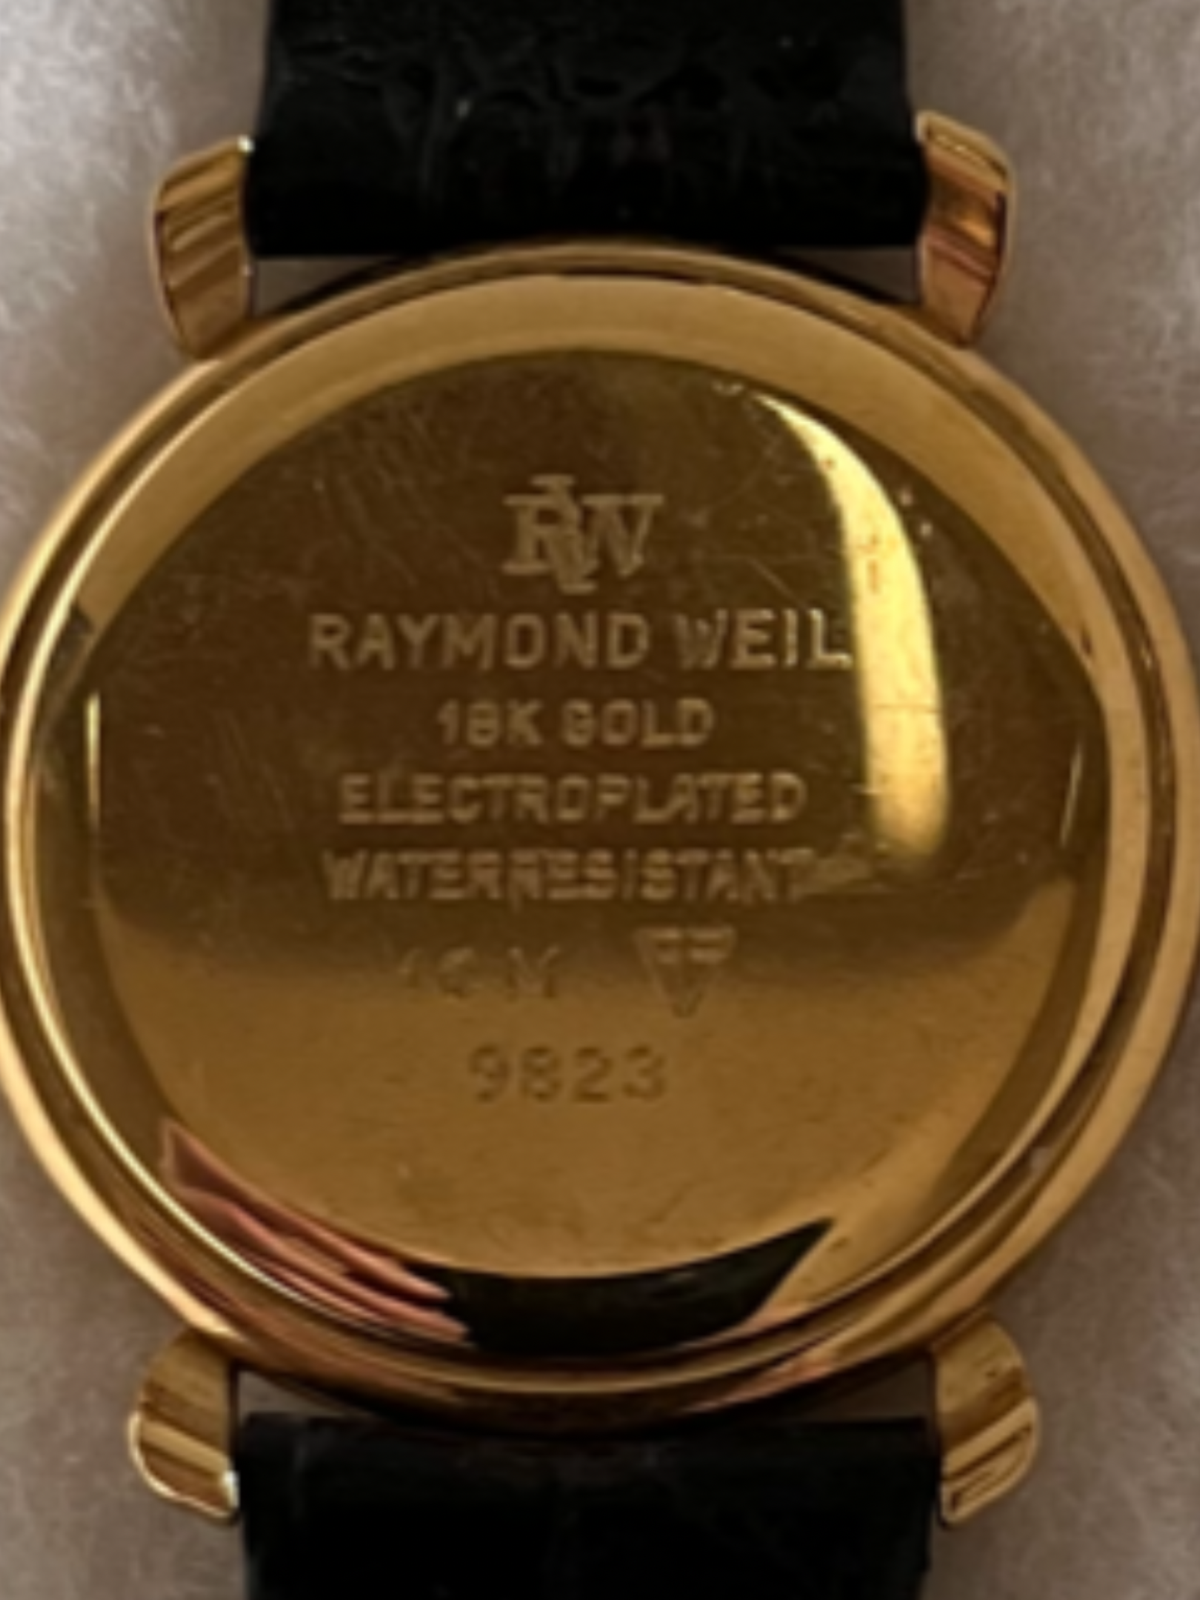 Raymond Weil 9823 watch